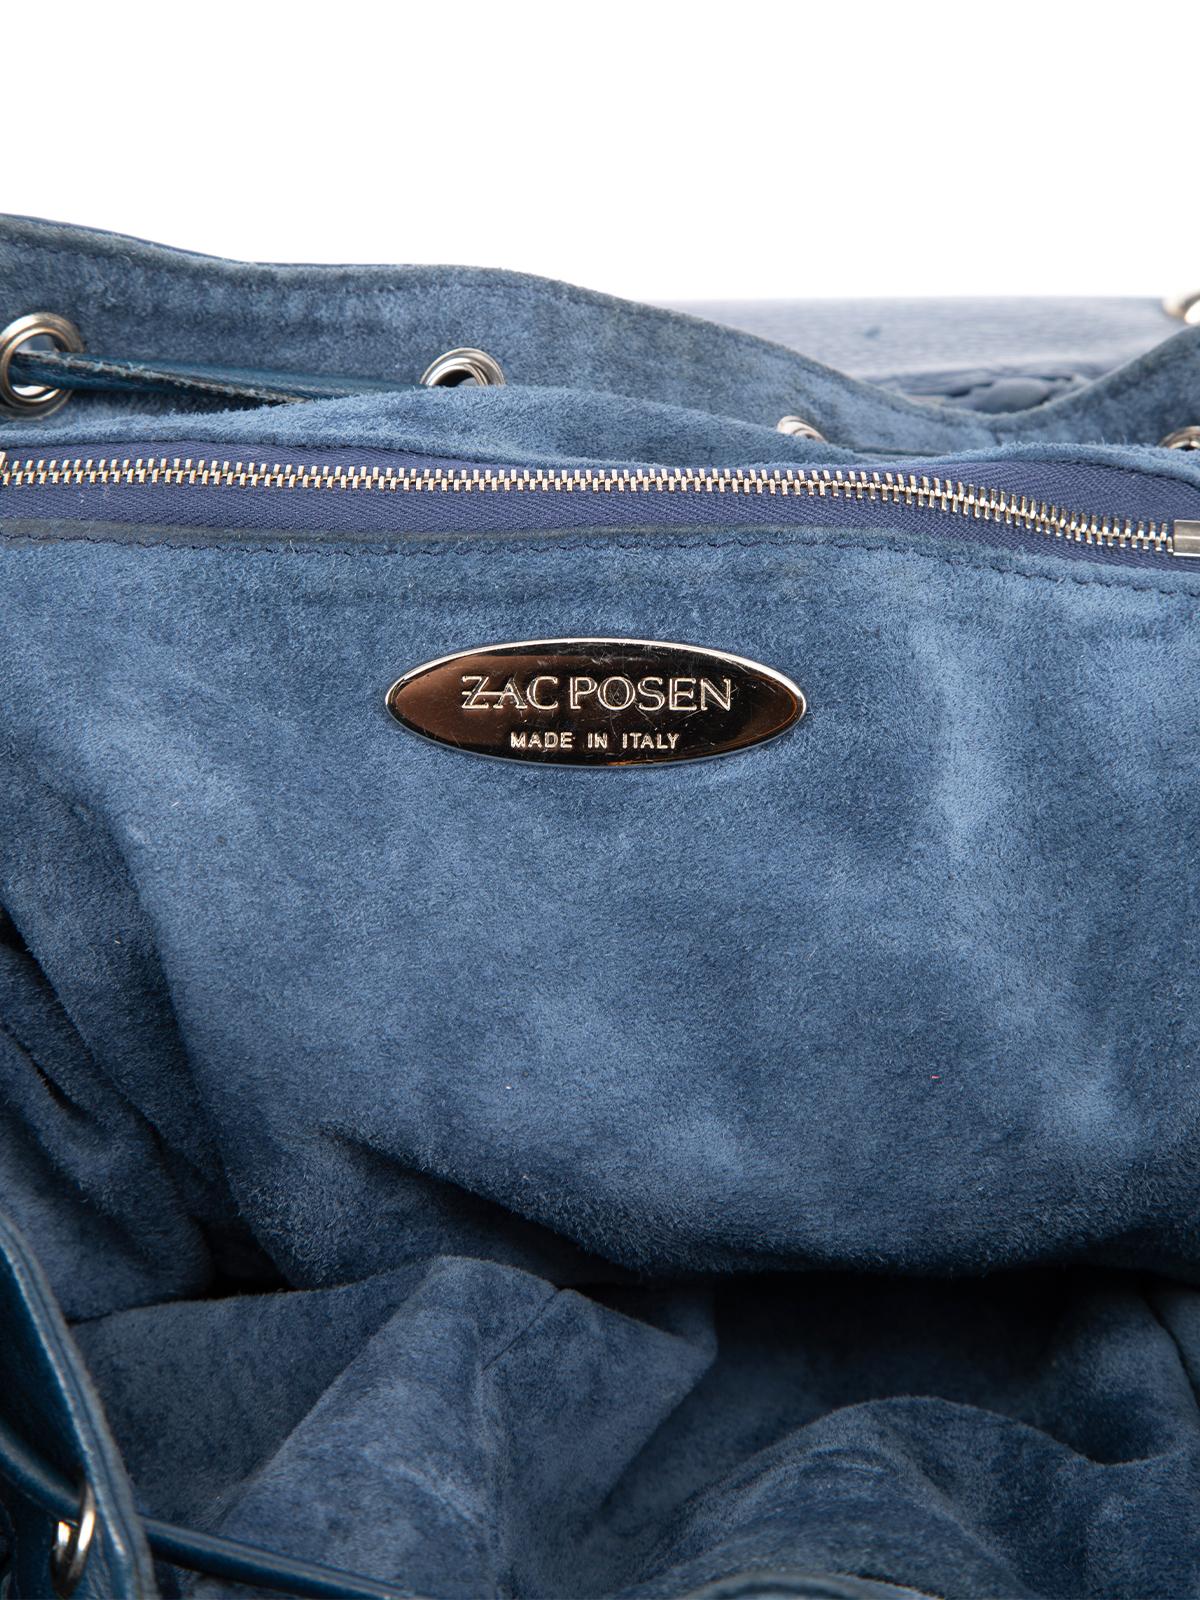 Pre-Loved Zac Posen Women's Blue Leather Woven Shoulder Bag 4